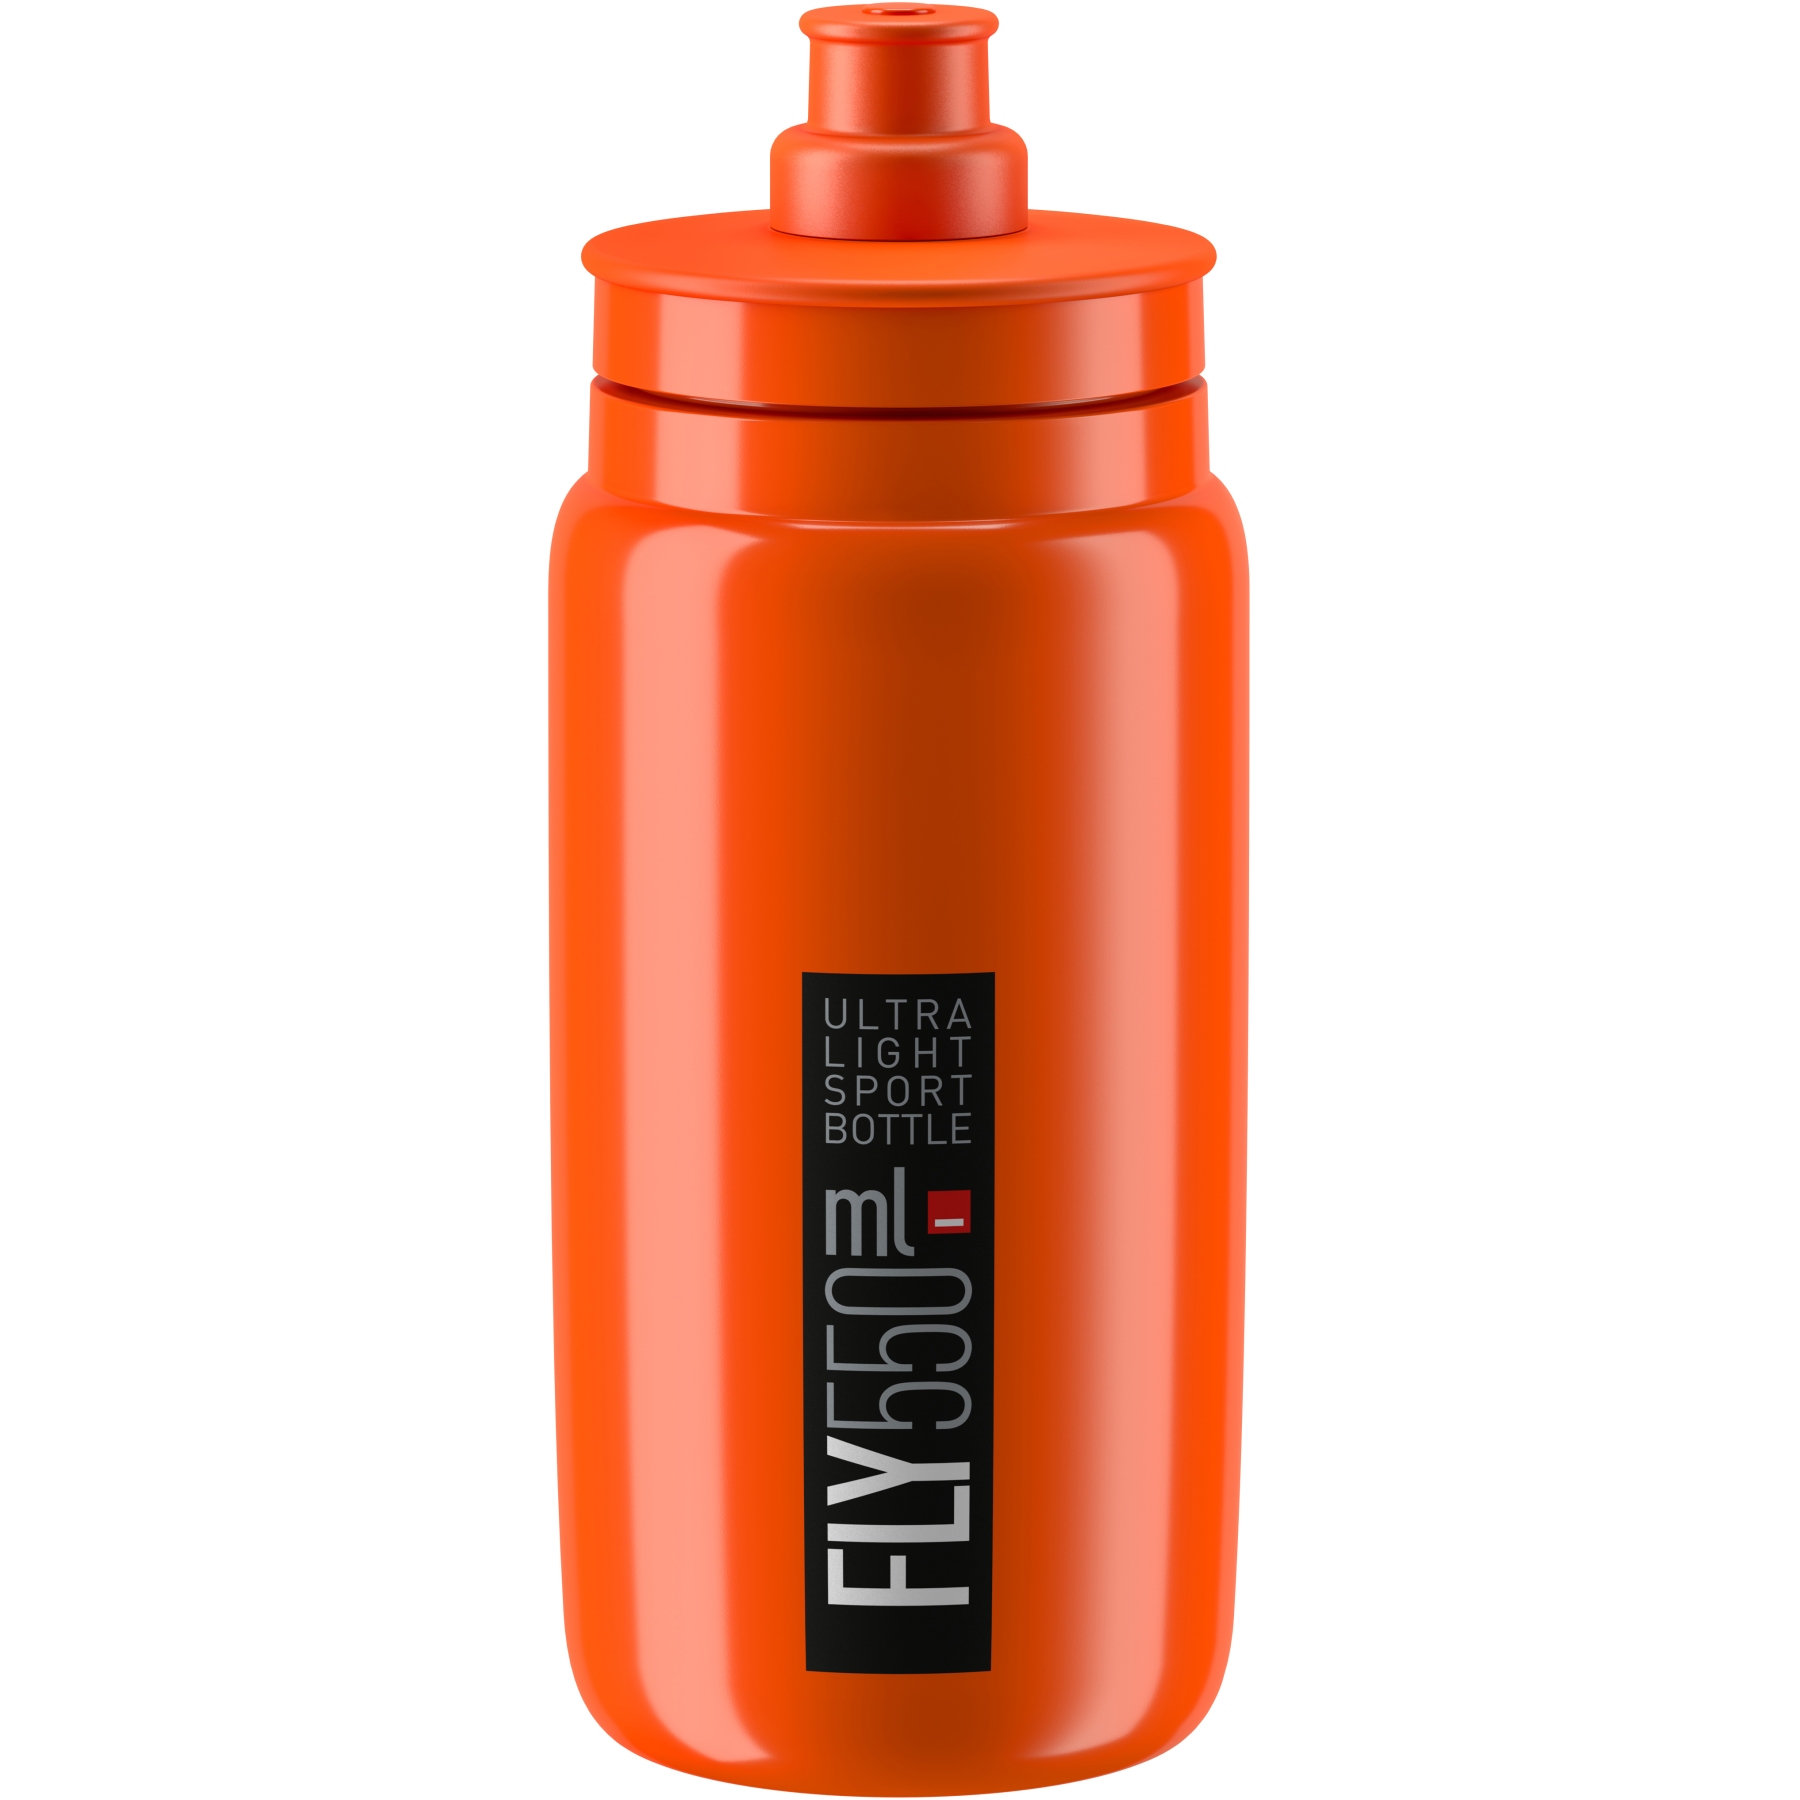 Productfoto van Elite Fly Bottle 550ml - orange/black